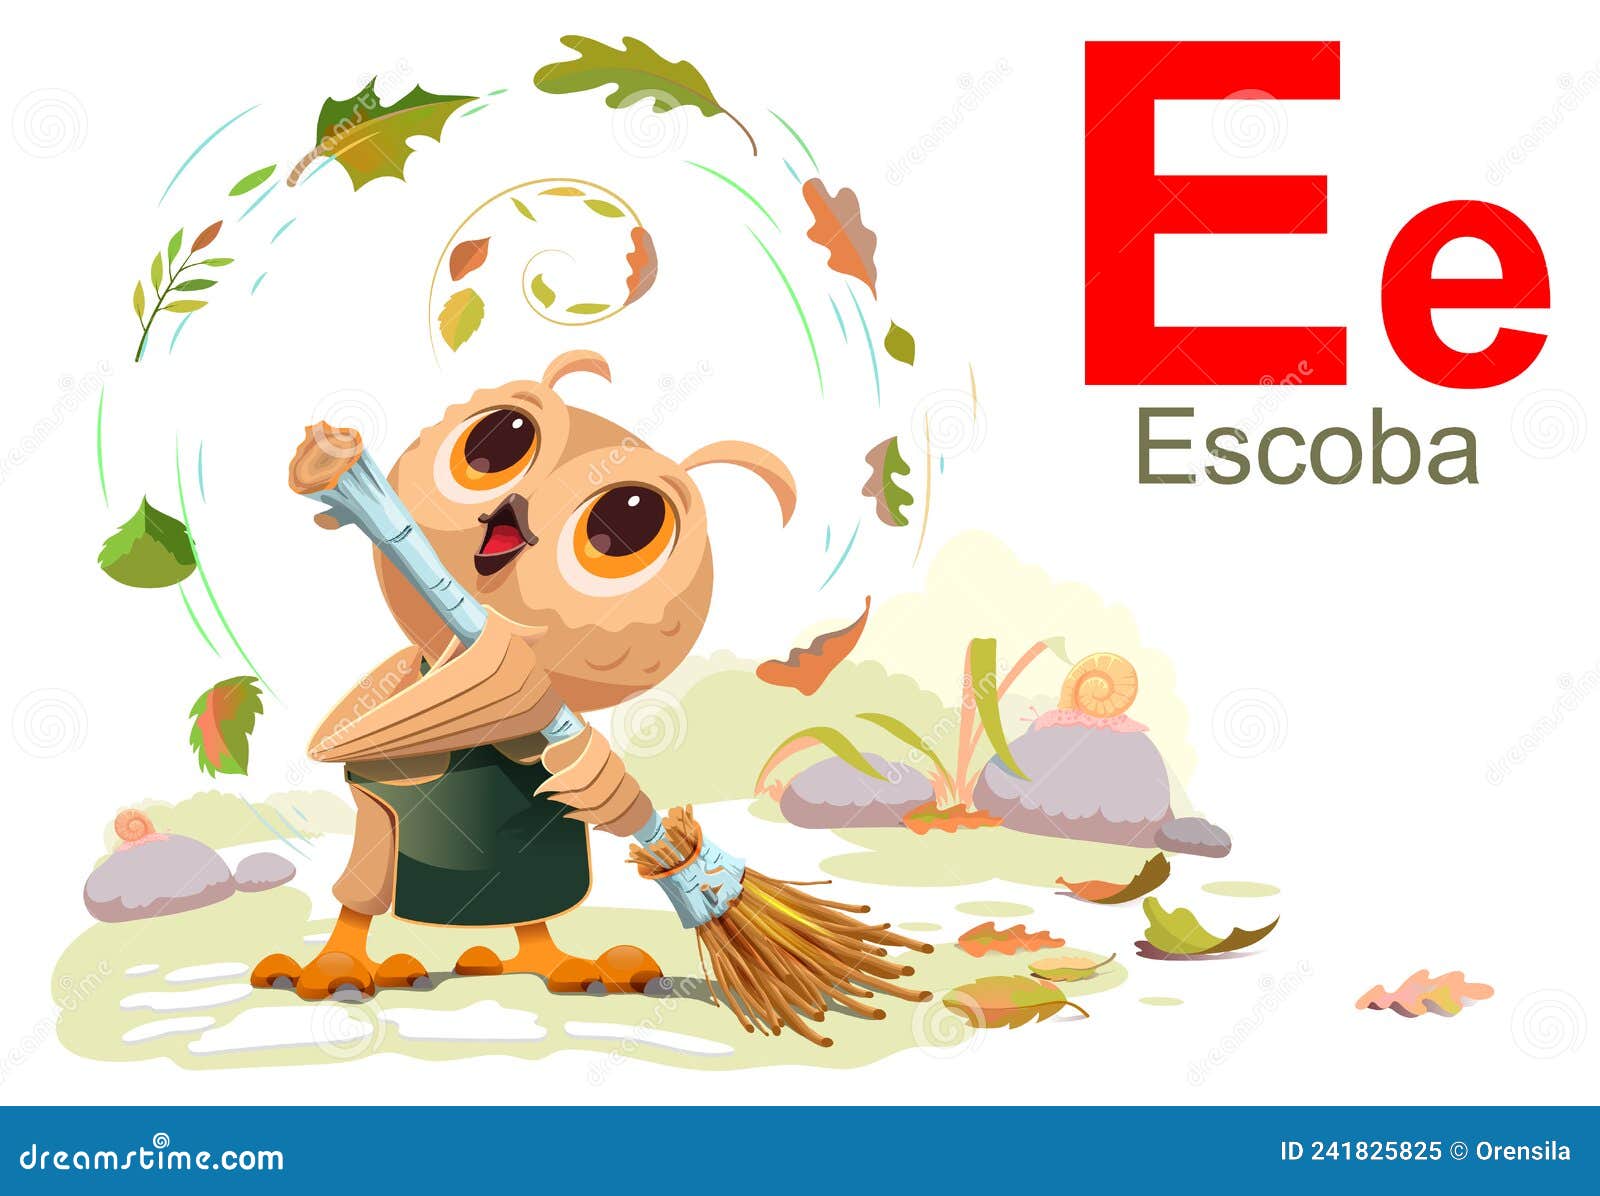 spanish abc alphabet letter e escoba. owl bird janitor sweeping leaves broom